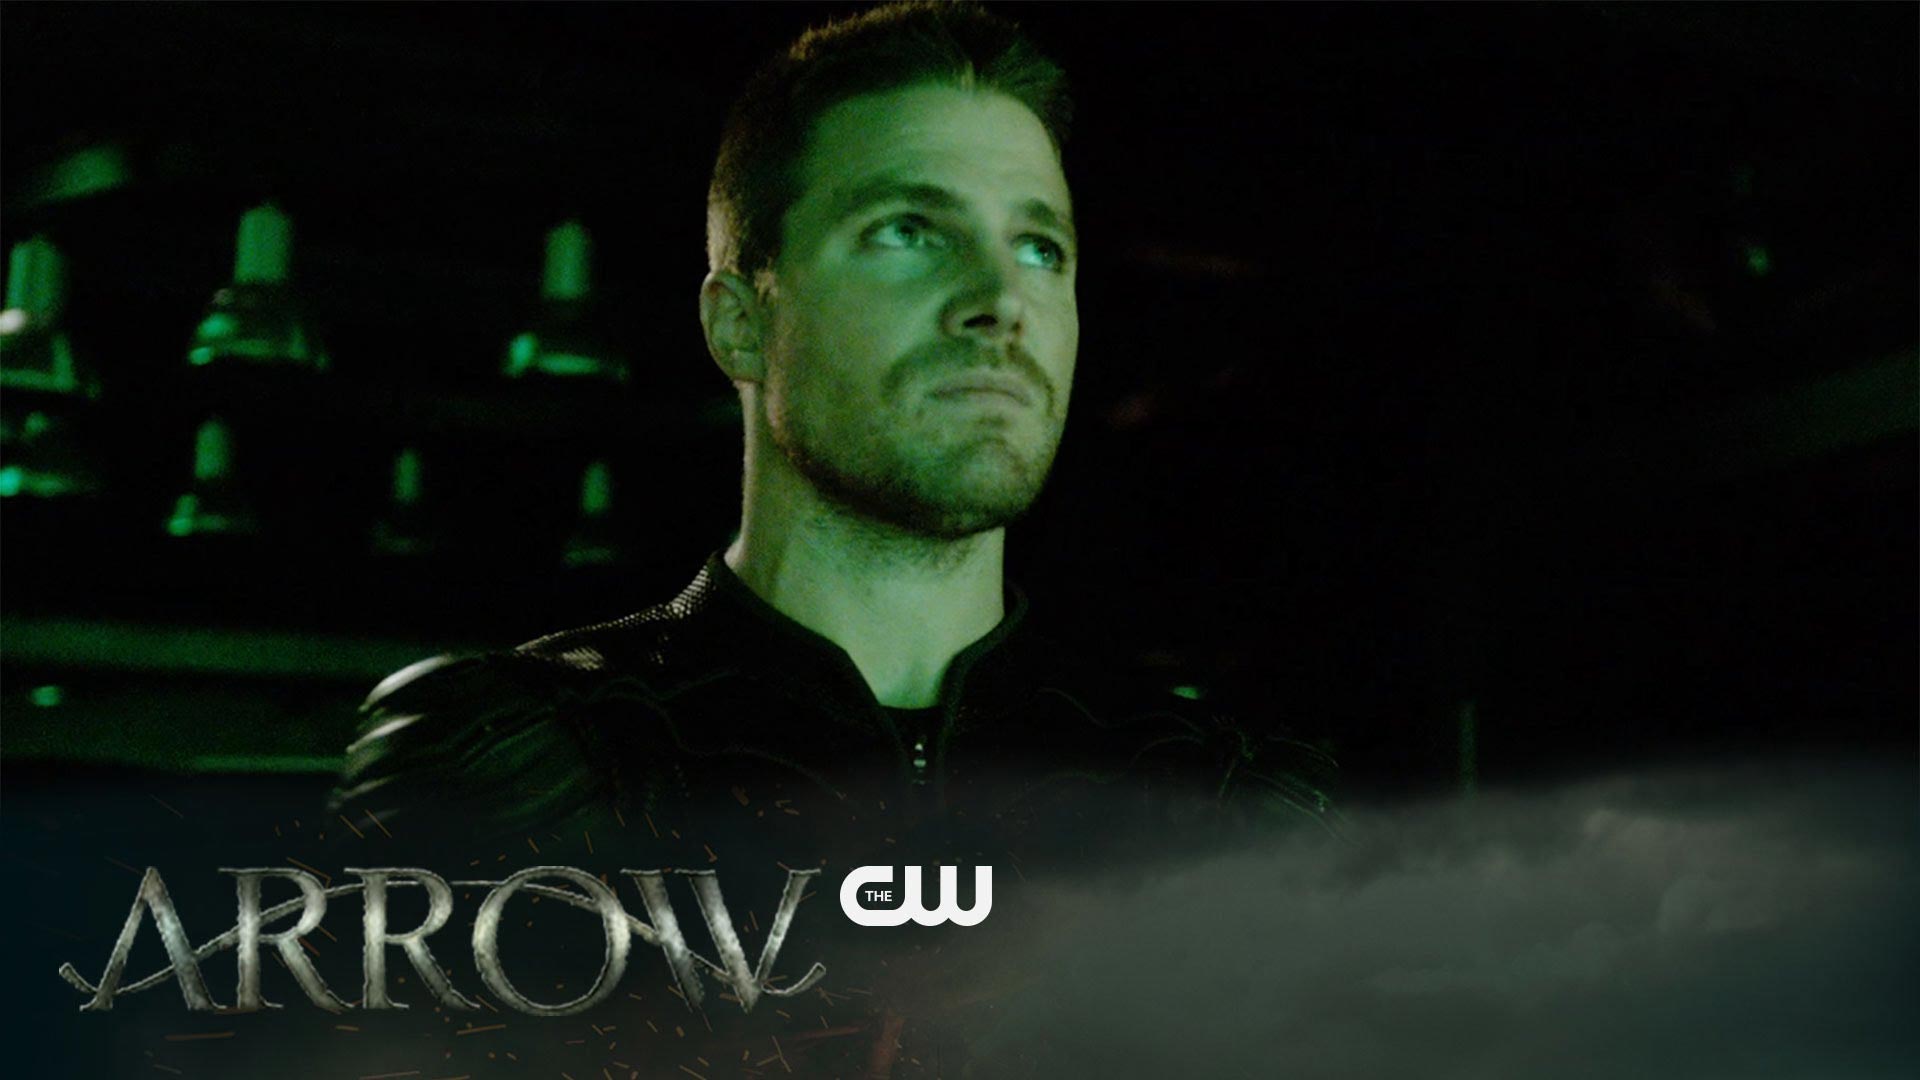 Arrow 5, svelato il nuovo team Arrow al Comic-Con